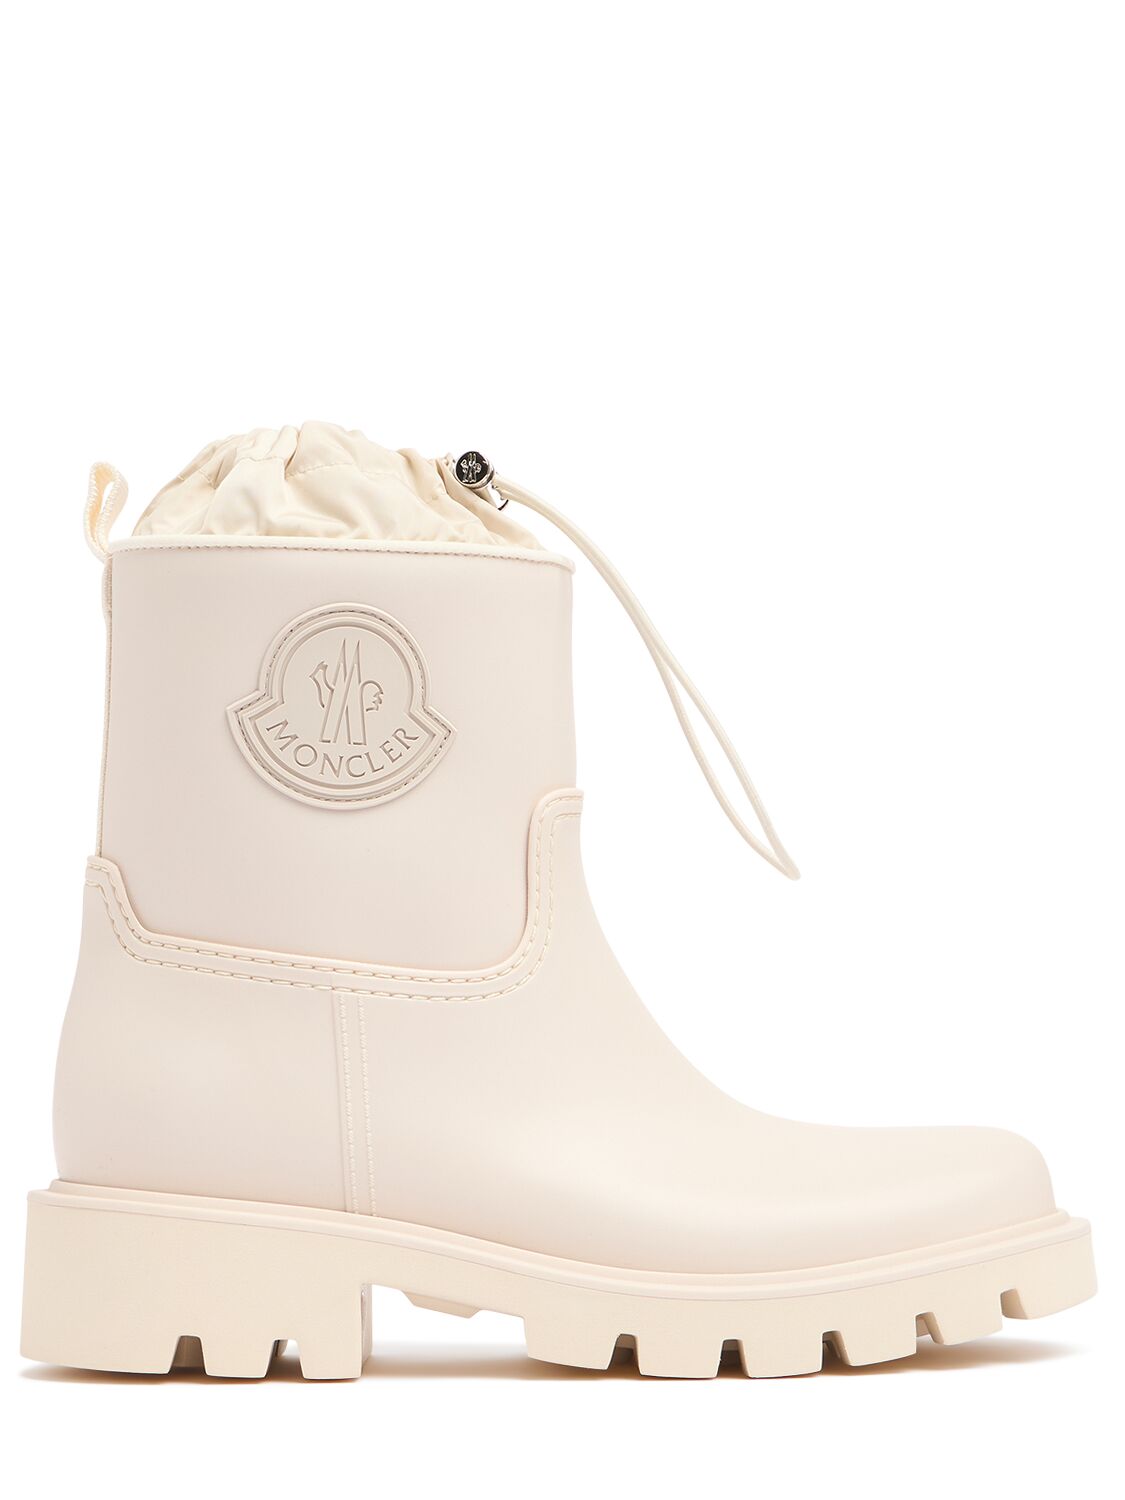 Moncler Kickstream Rubber Rain Boots In White